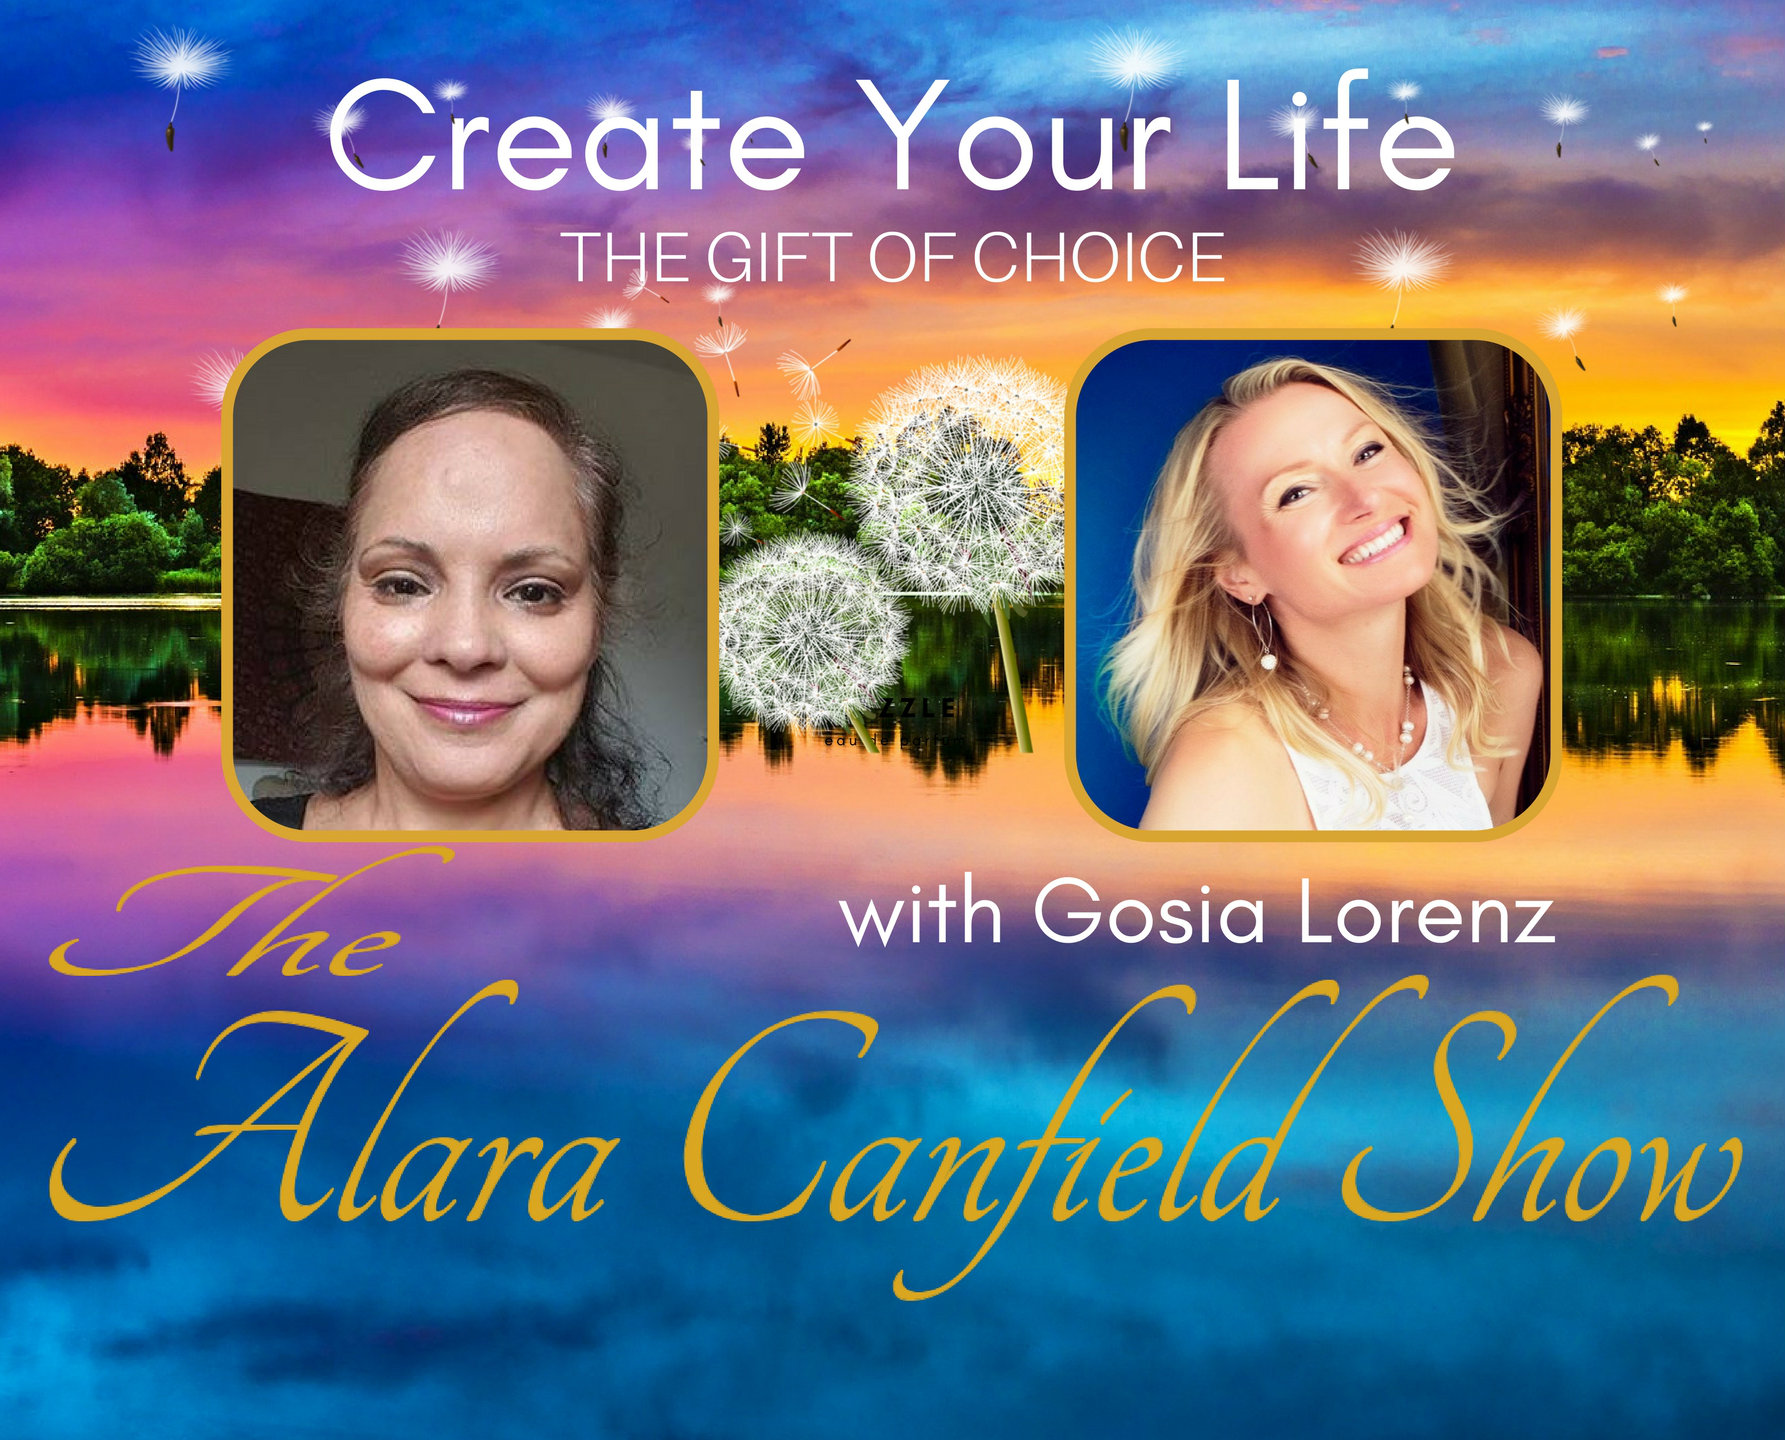 Create Your Life with Gosia Lorenz April 19